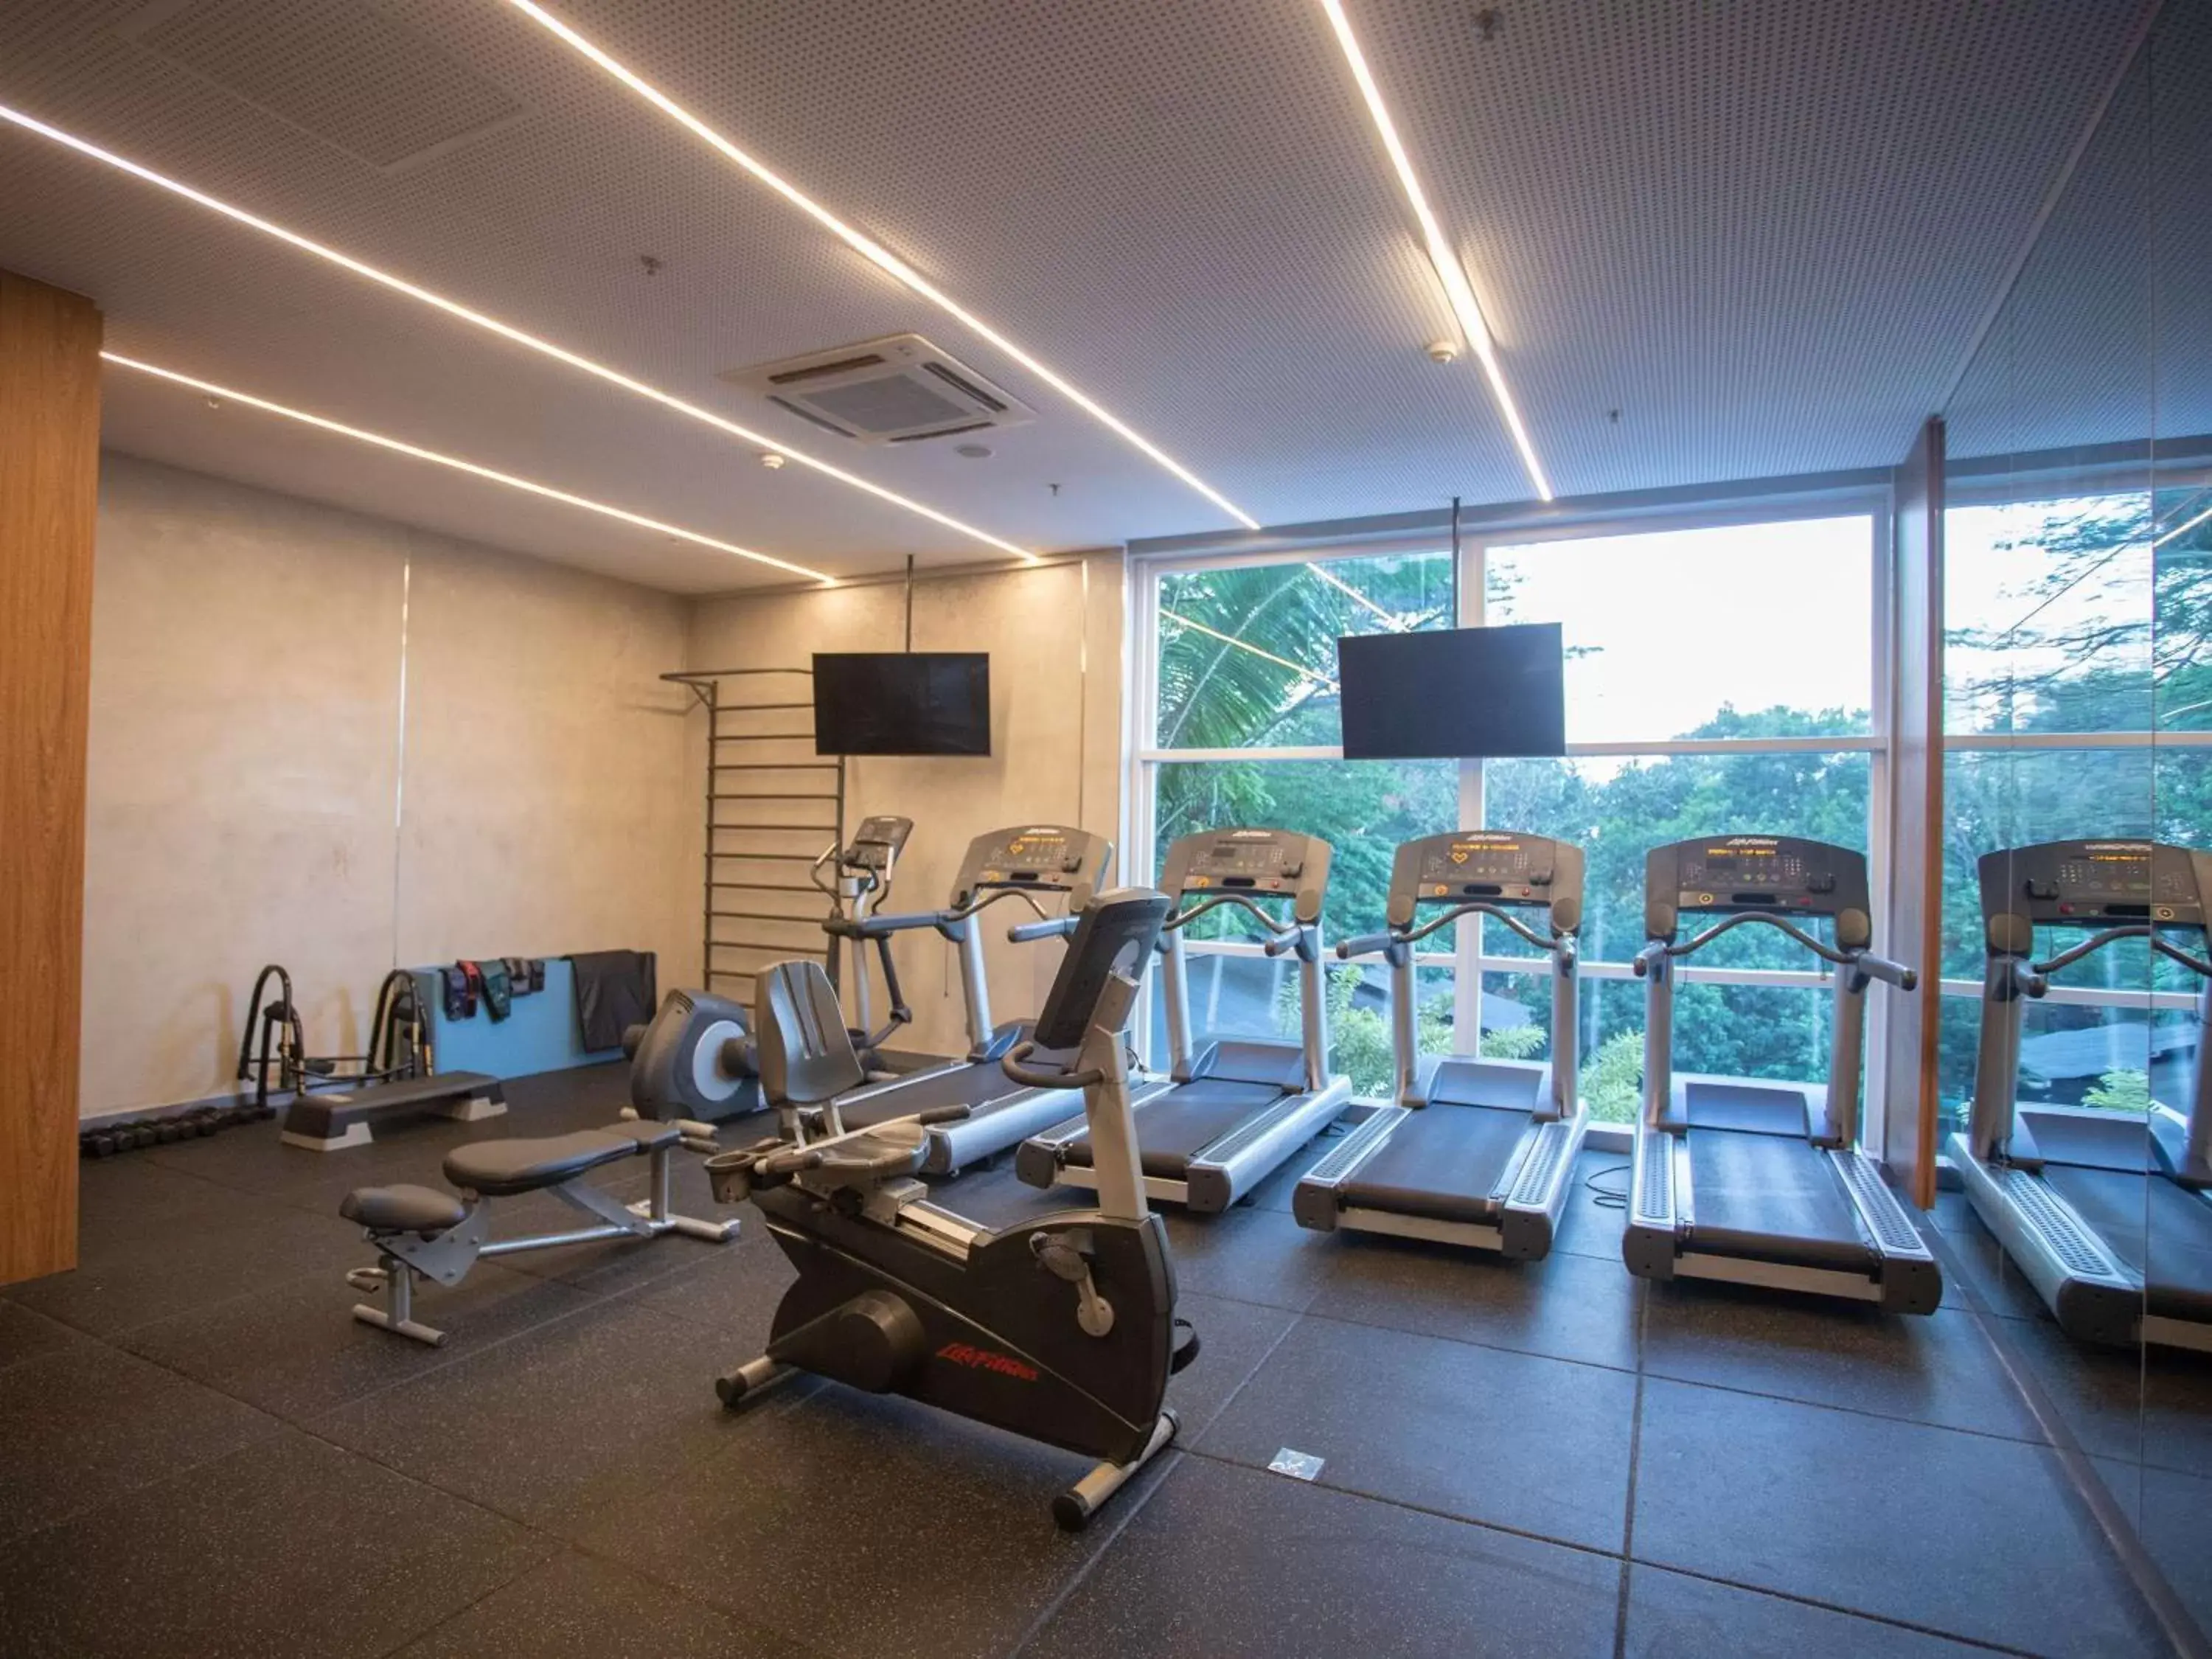 Fitness centre/facilities, Fitness Center/Facilities in Novotel Sao Paulo Morumbi